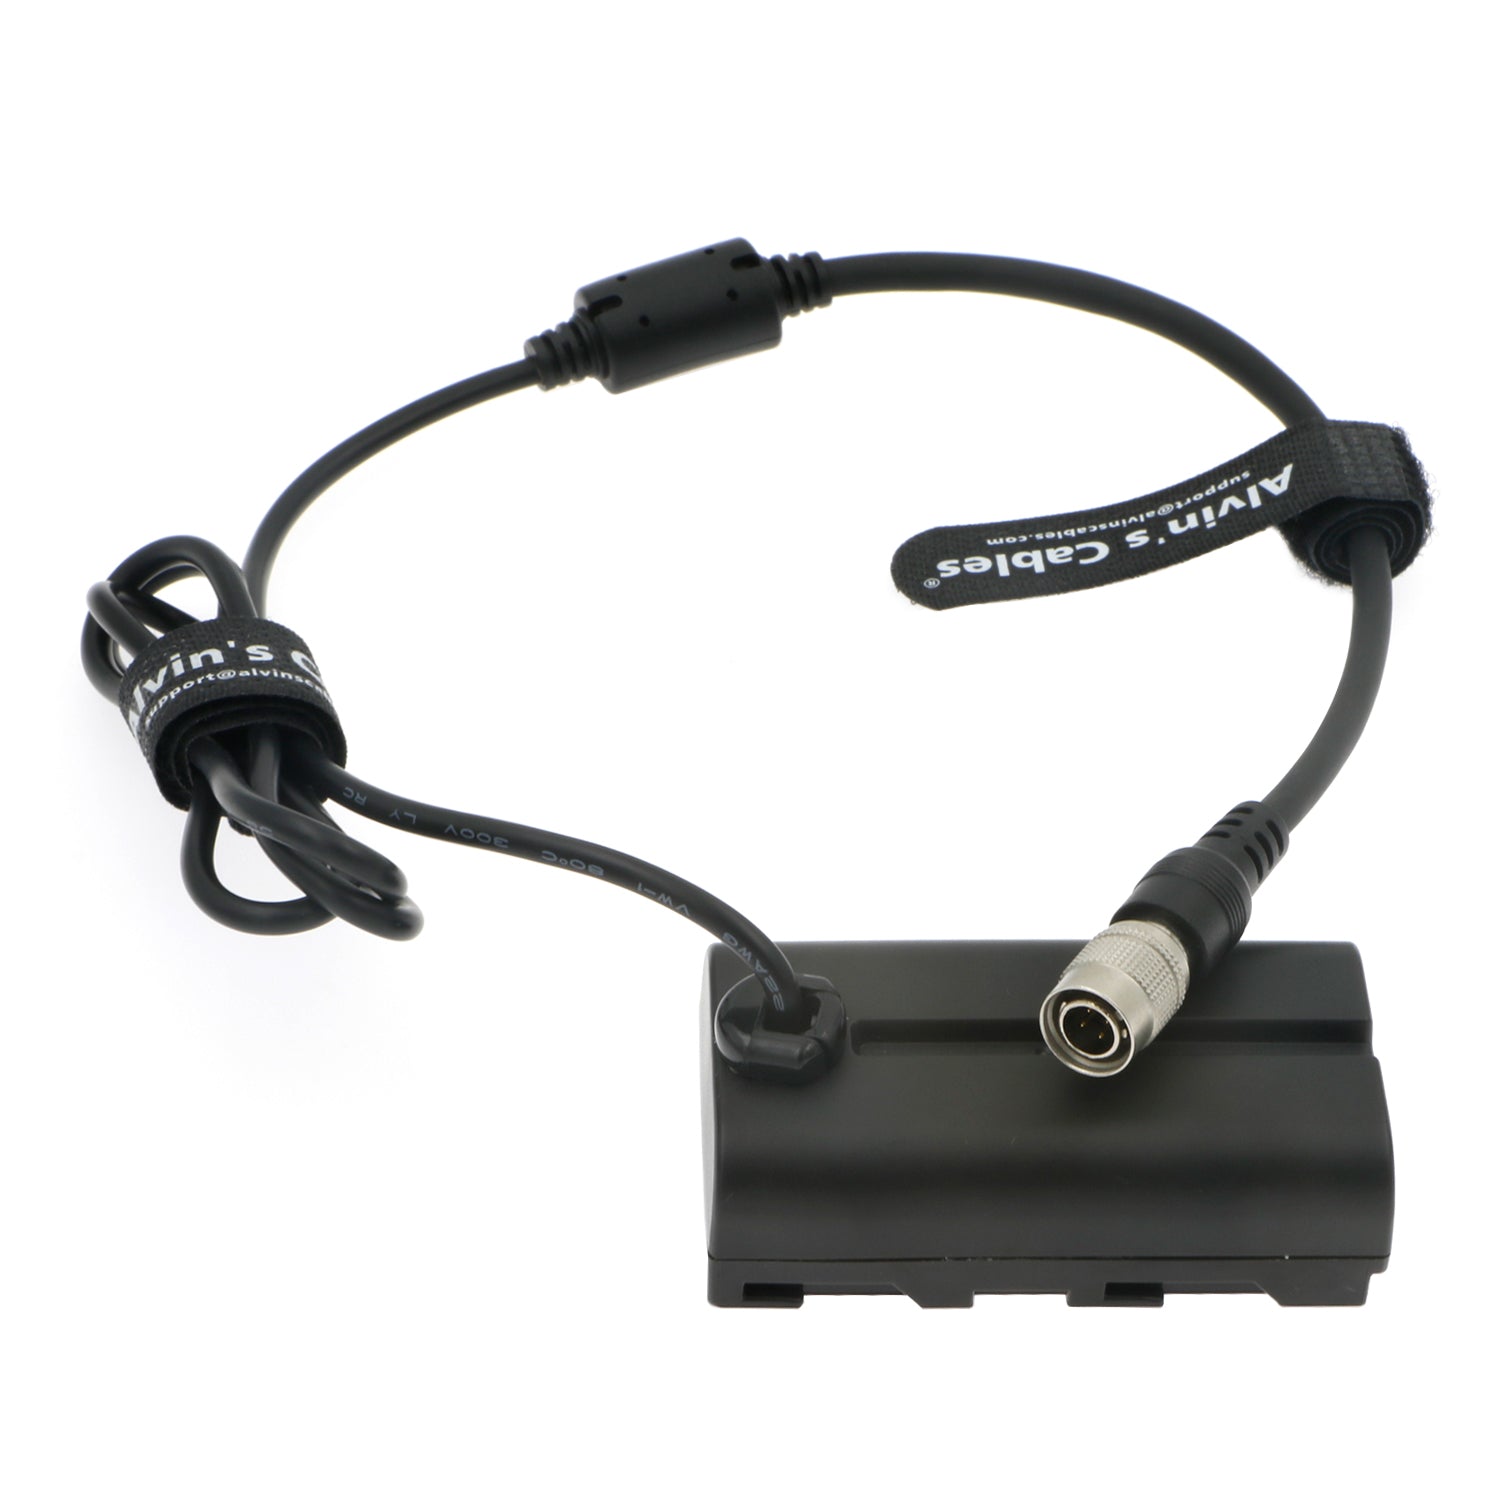 NP F550 Dummy-Akku zu Hirose 4-poliger Stecker Stromkabel für Sony zu Feelworld Monitor 7 